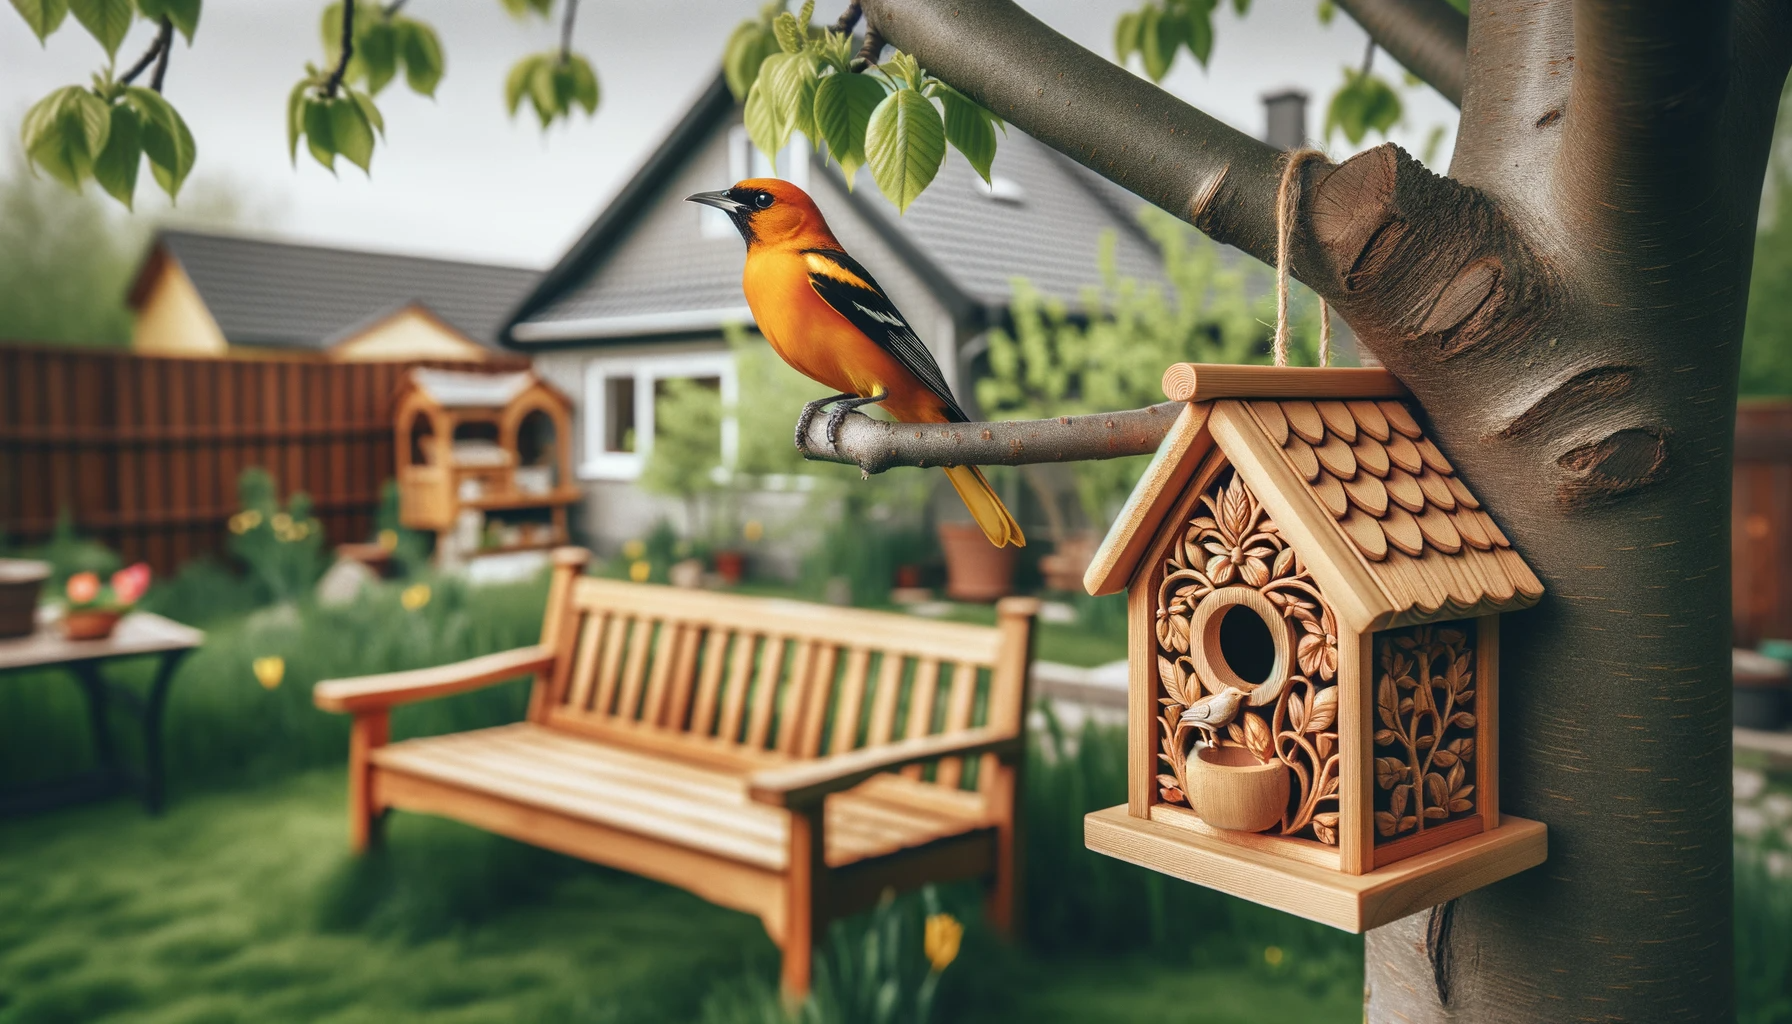 birdhouse in a garden with orange songbird and bench in background